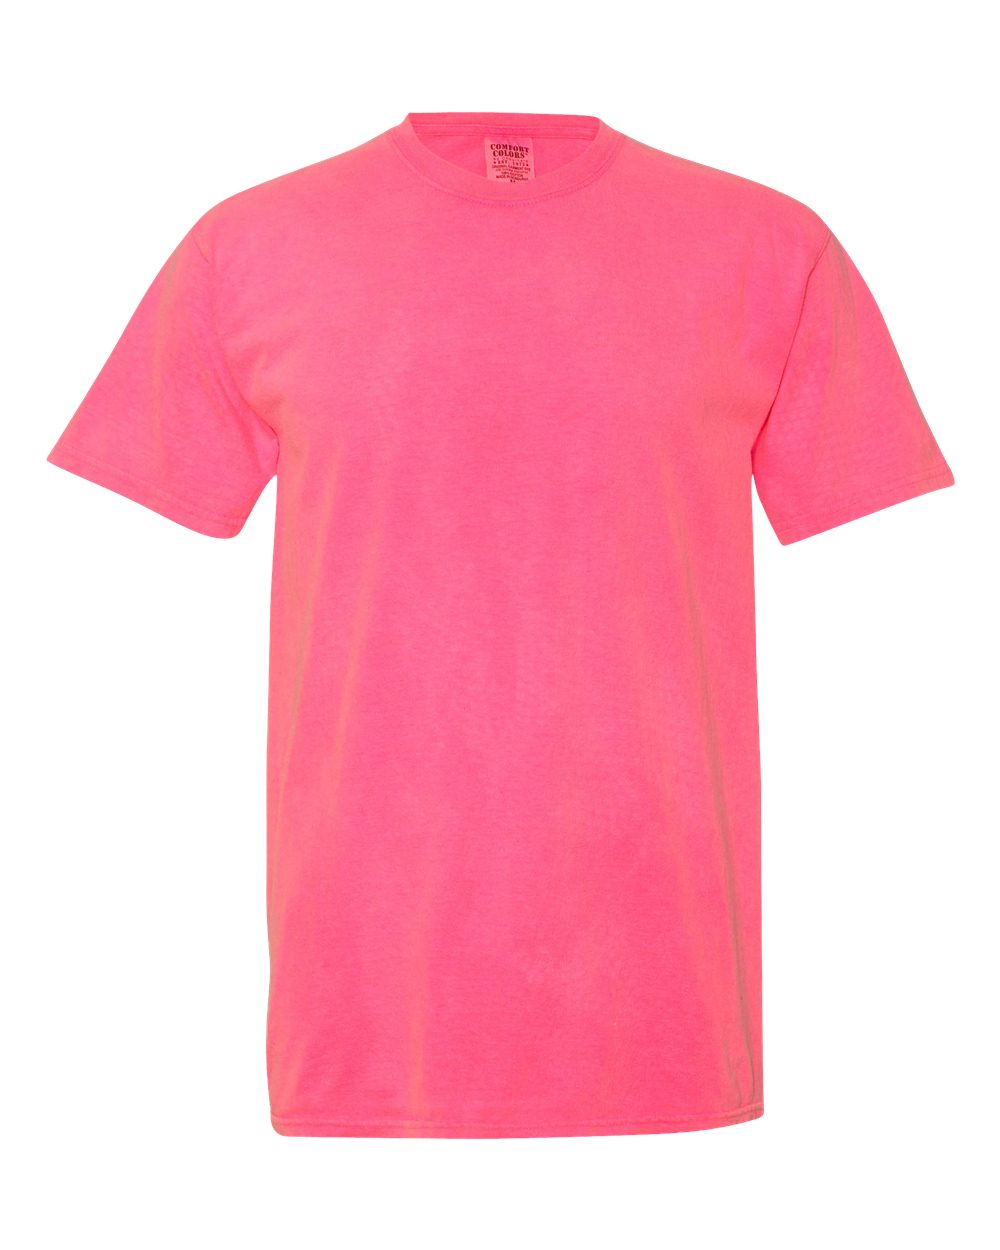 Comfort Colors 1717 - Garment Dyed Heavyweight Ringspun Short Sleeve Shirt  $6.43 - T-Shirts